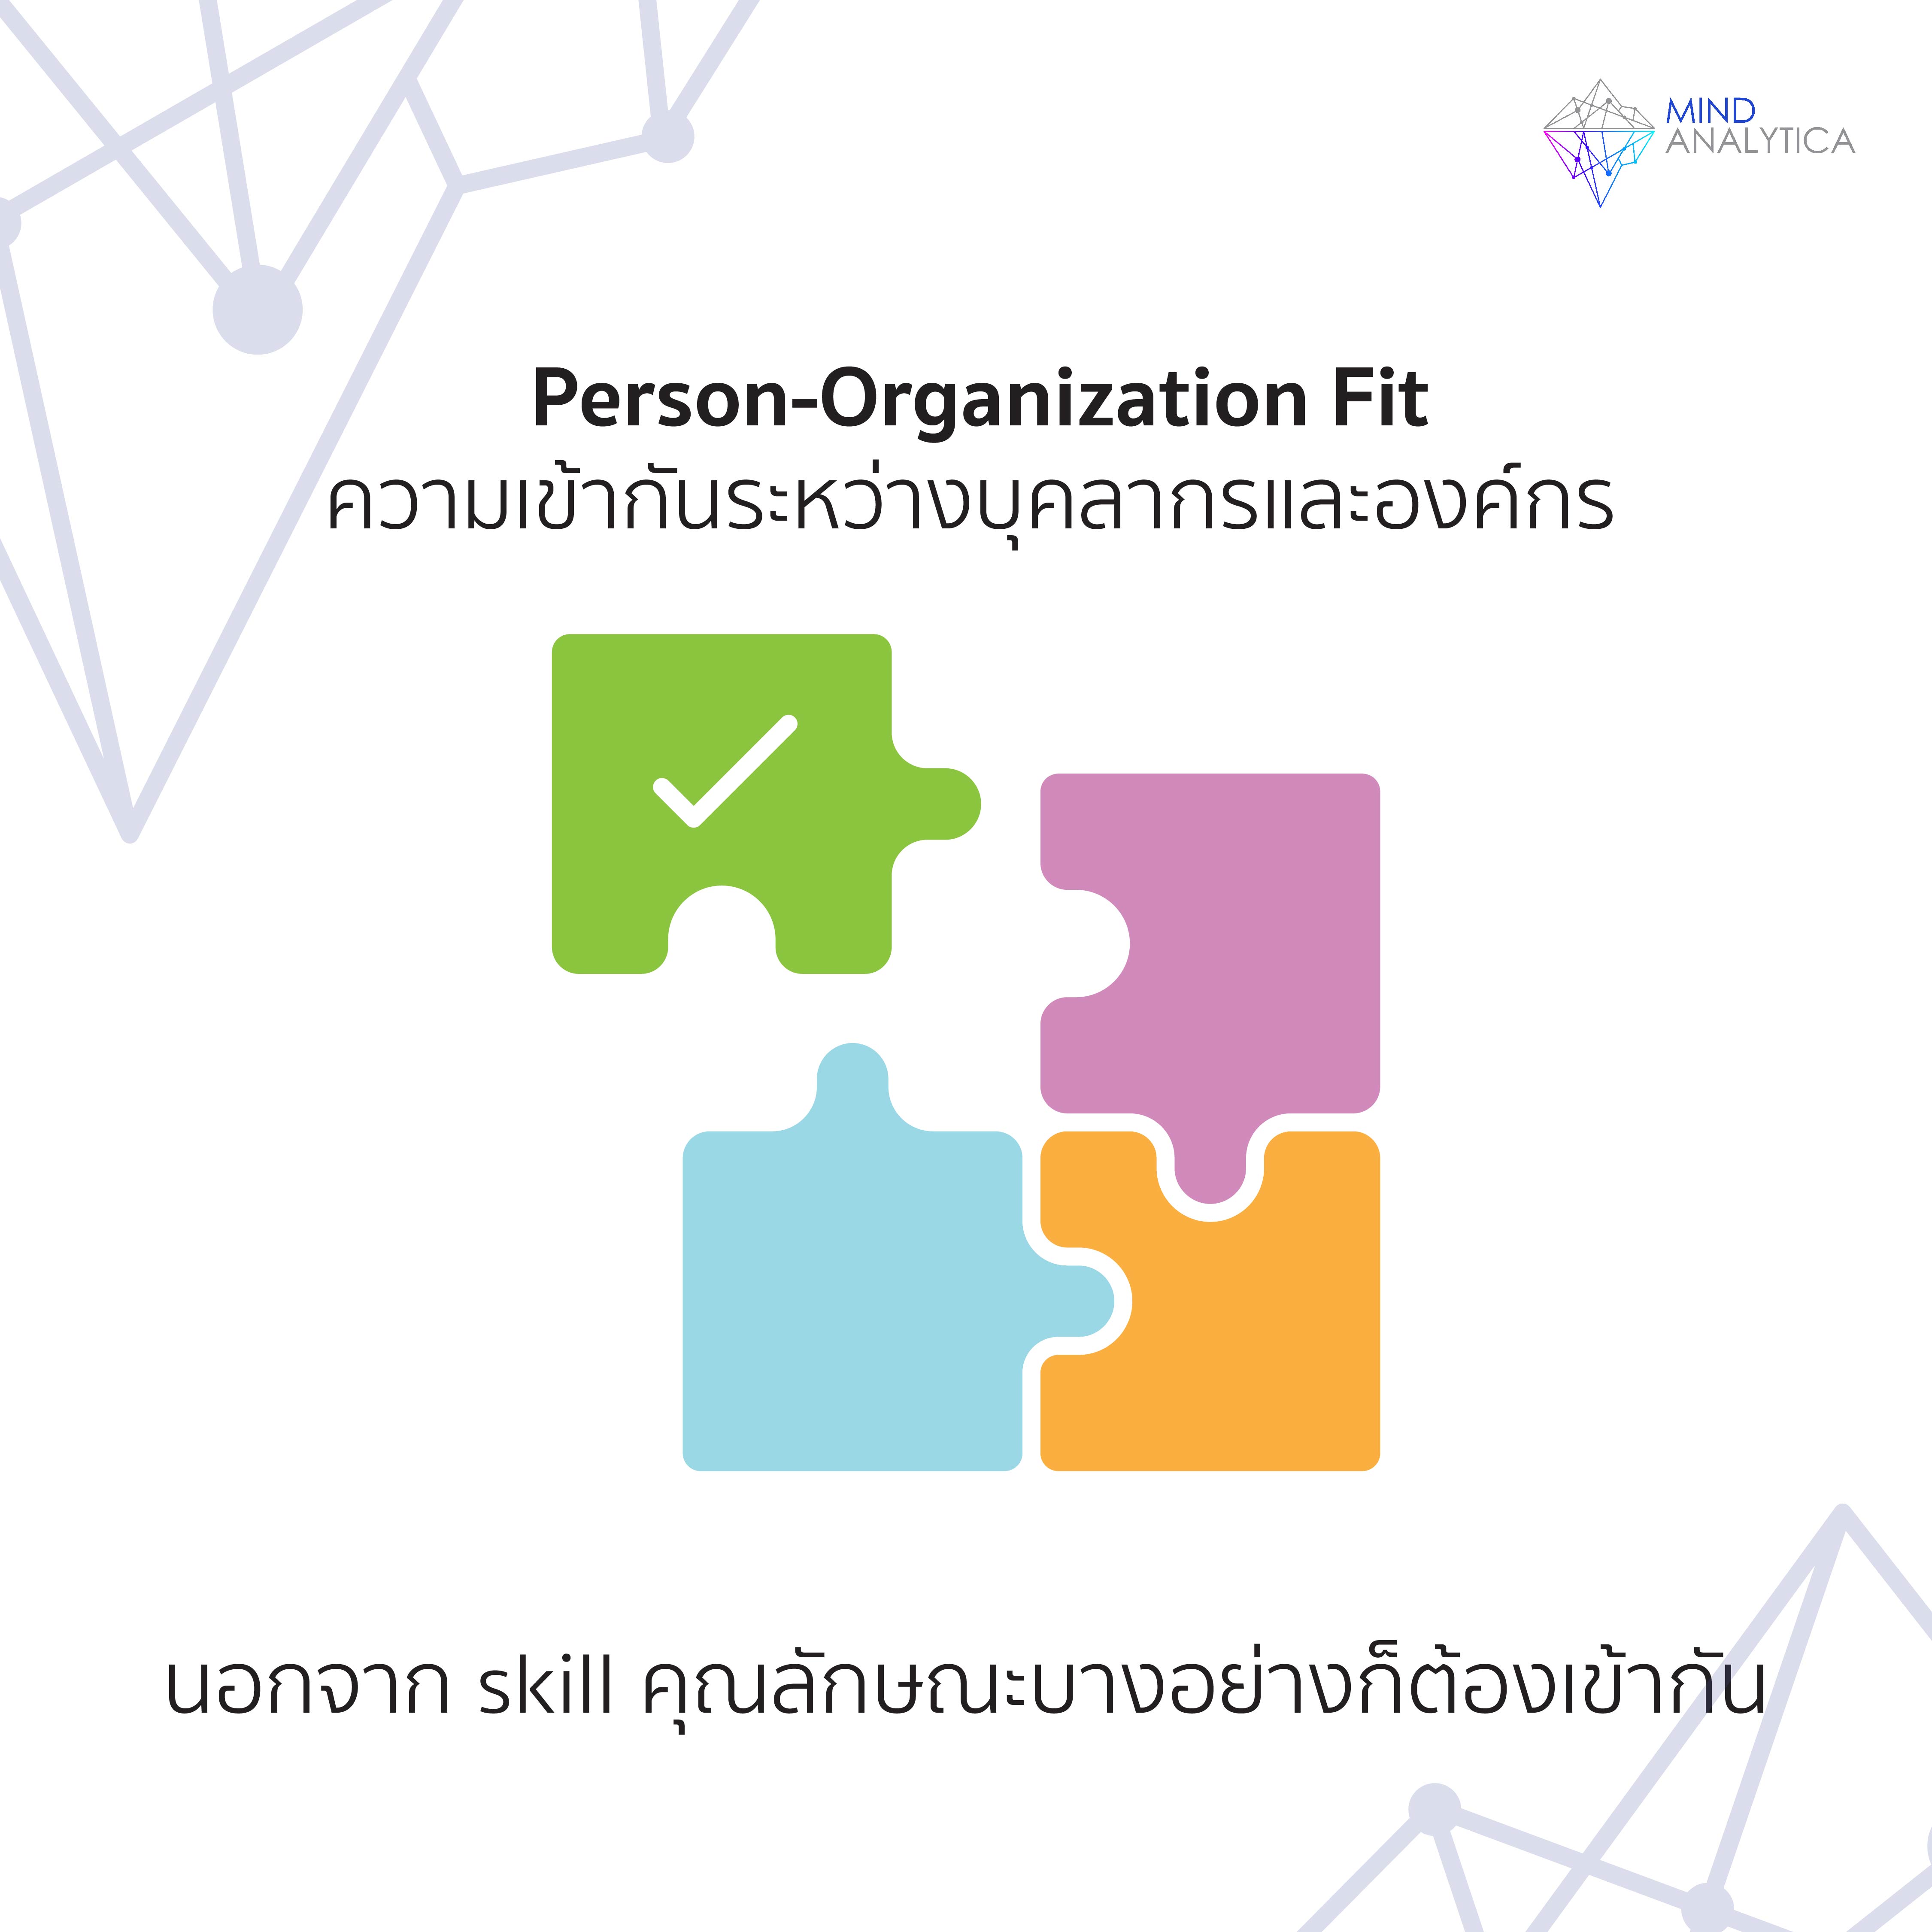 Person-Organization Fit ความเข้ากันระหว่างพนักงานและองค์กร